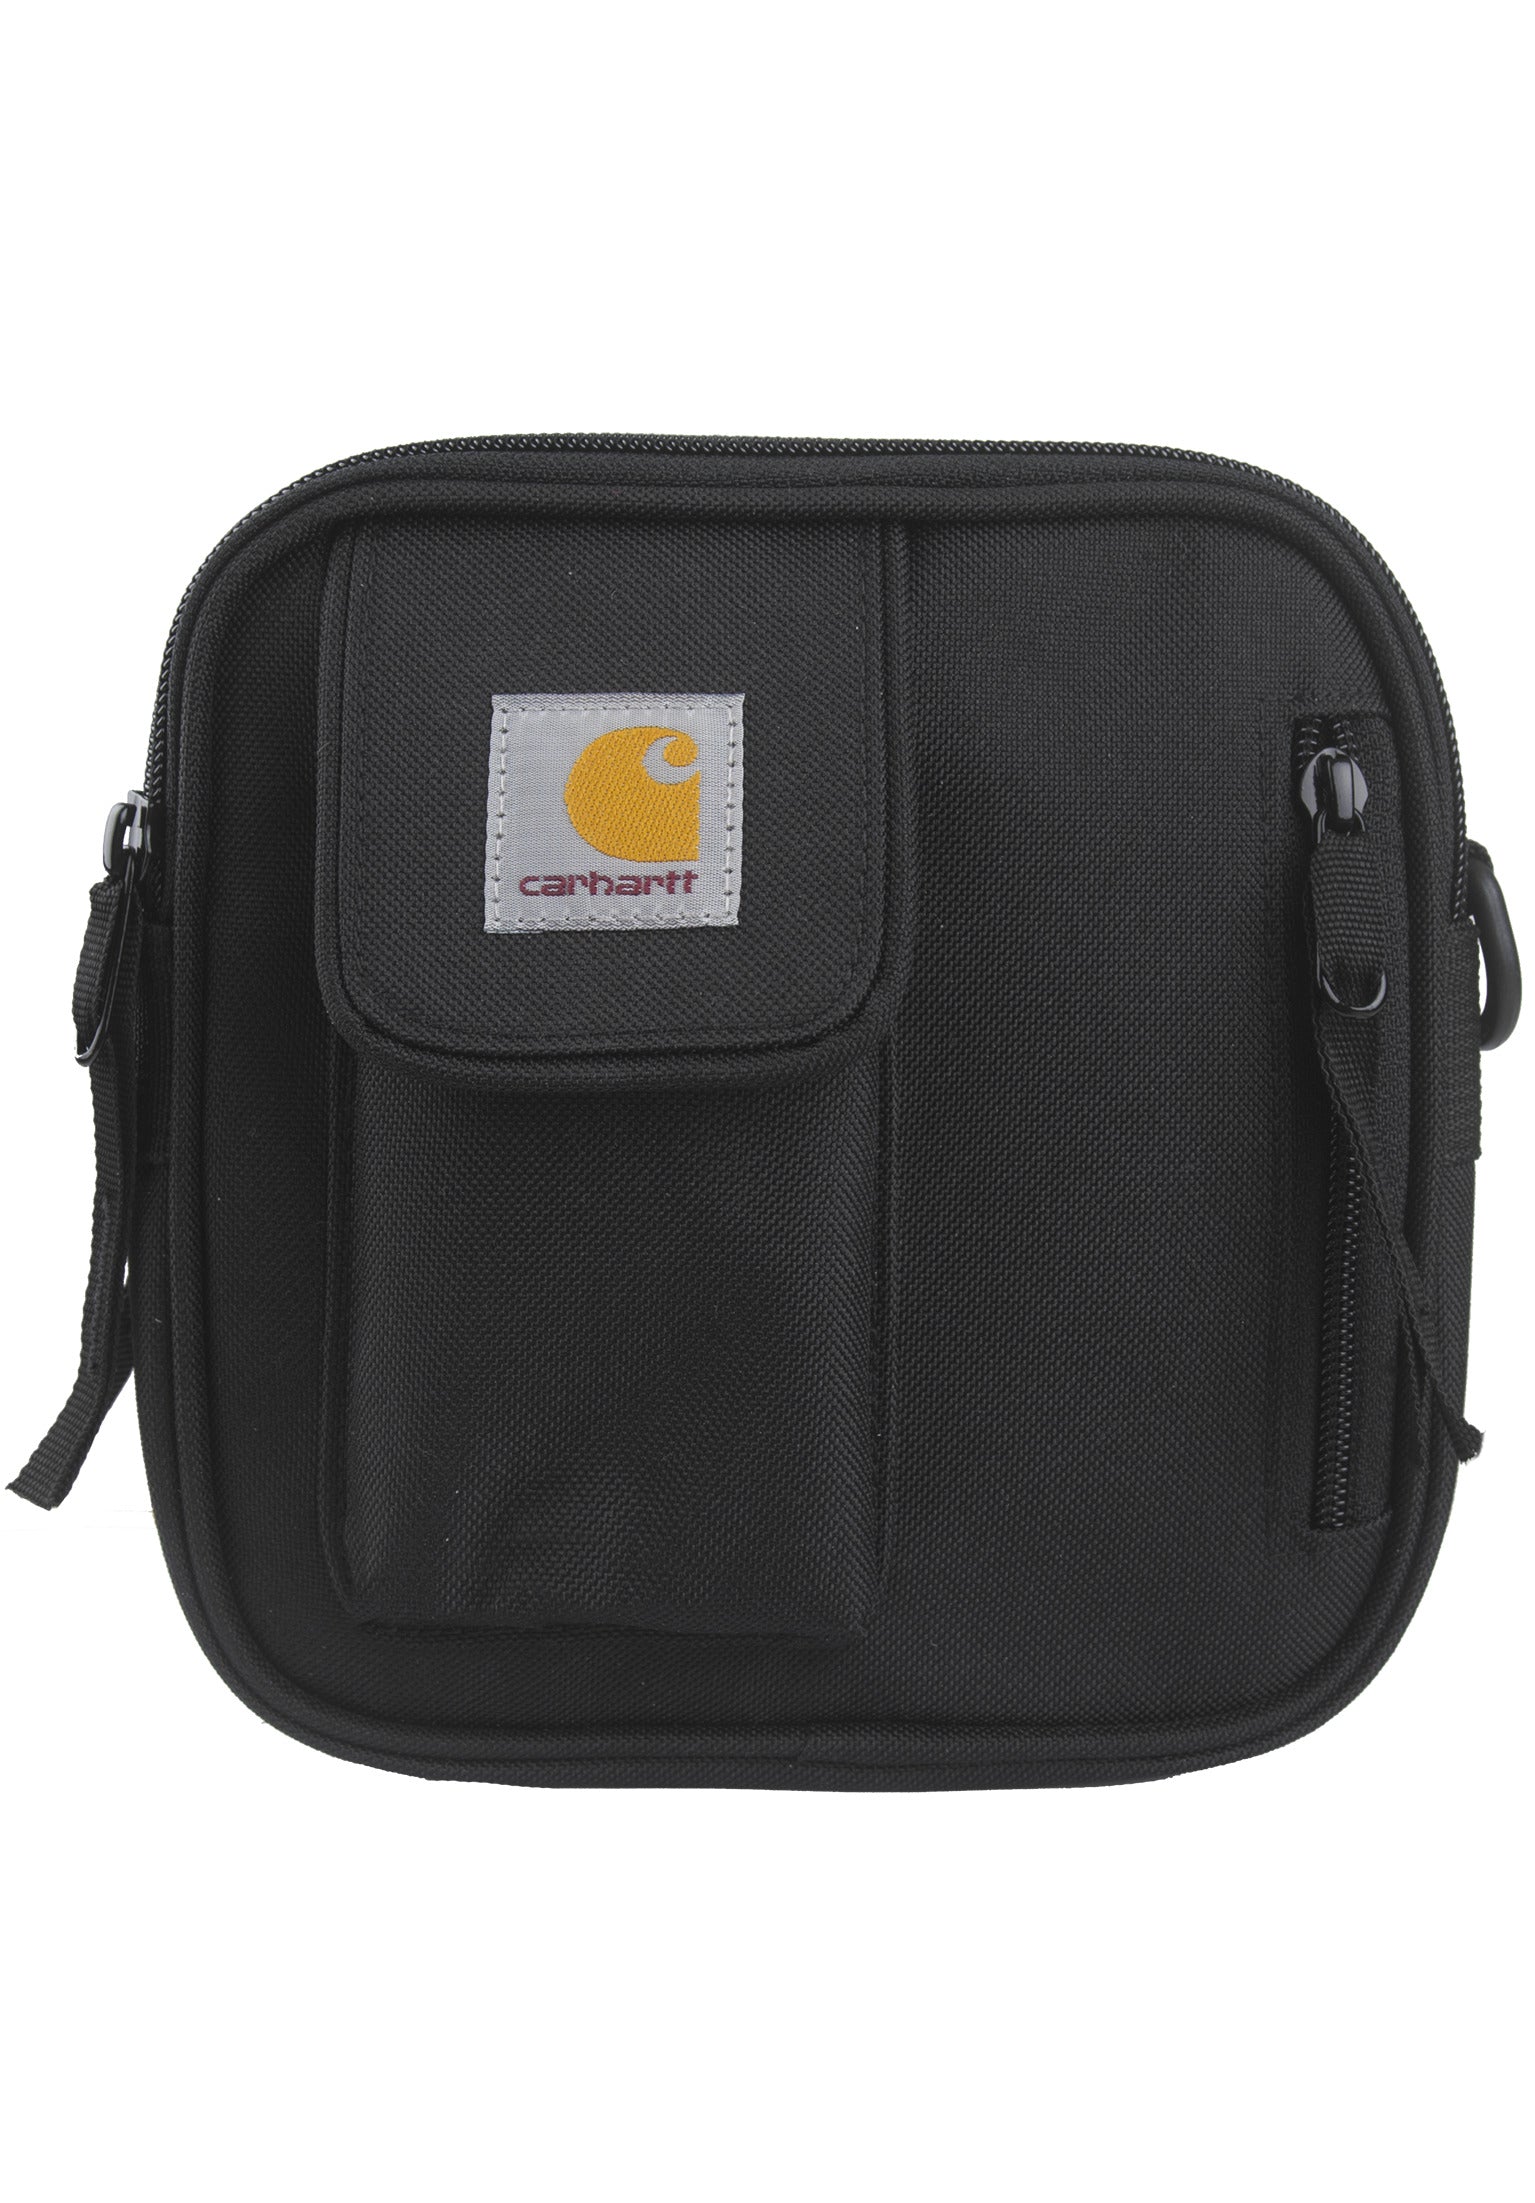 Essentials Bag Small Carhartt WIP Bag in black for Women – TITUS